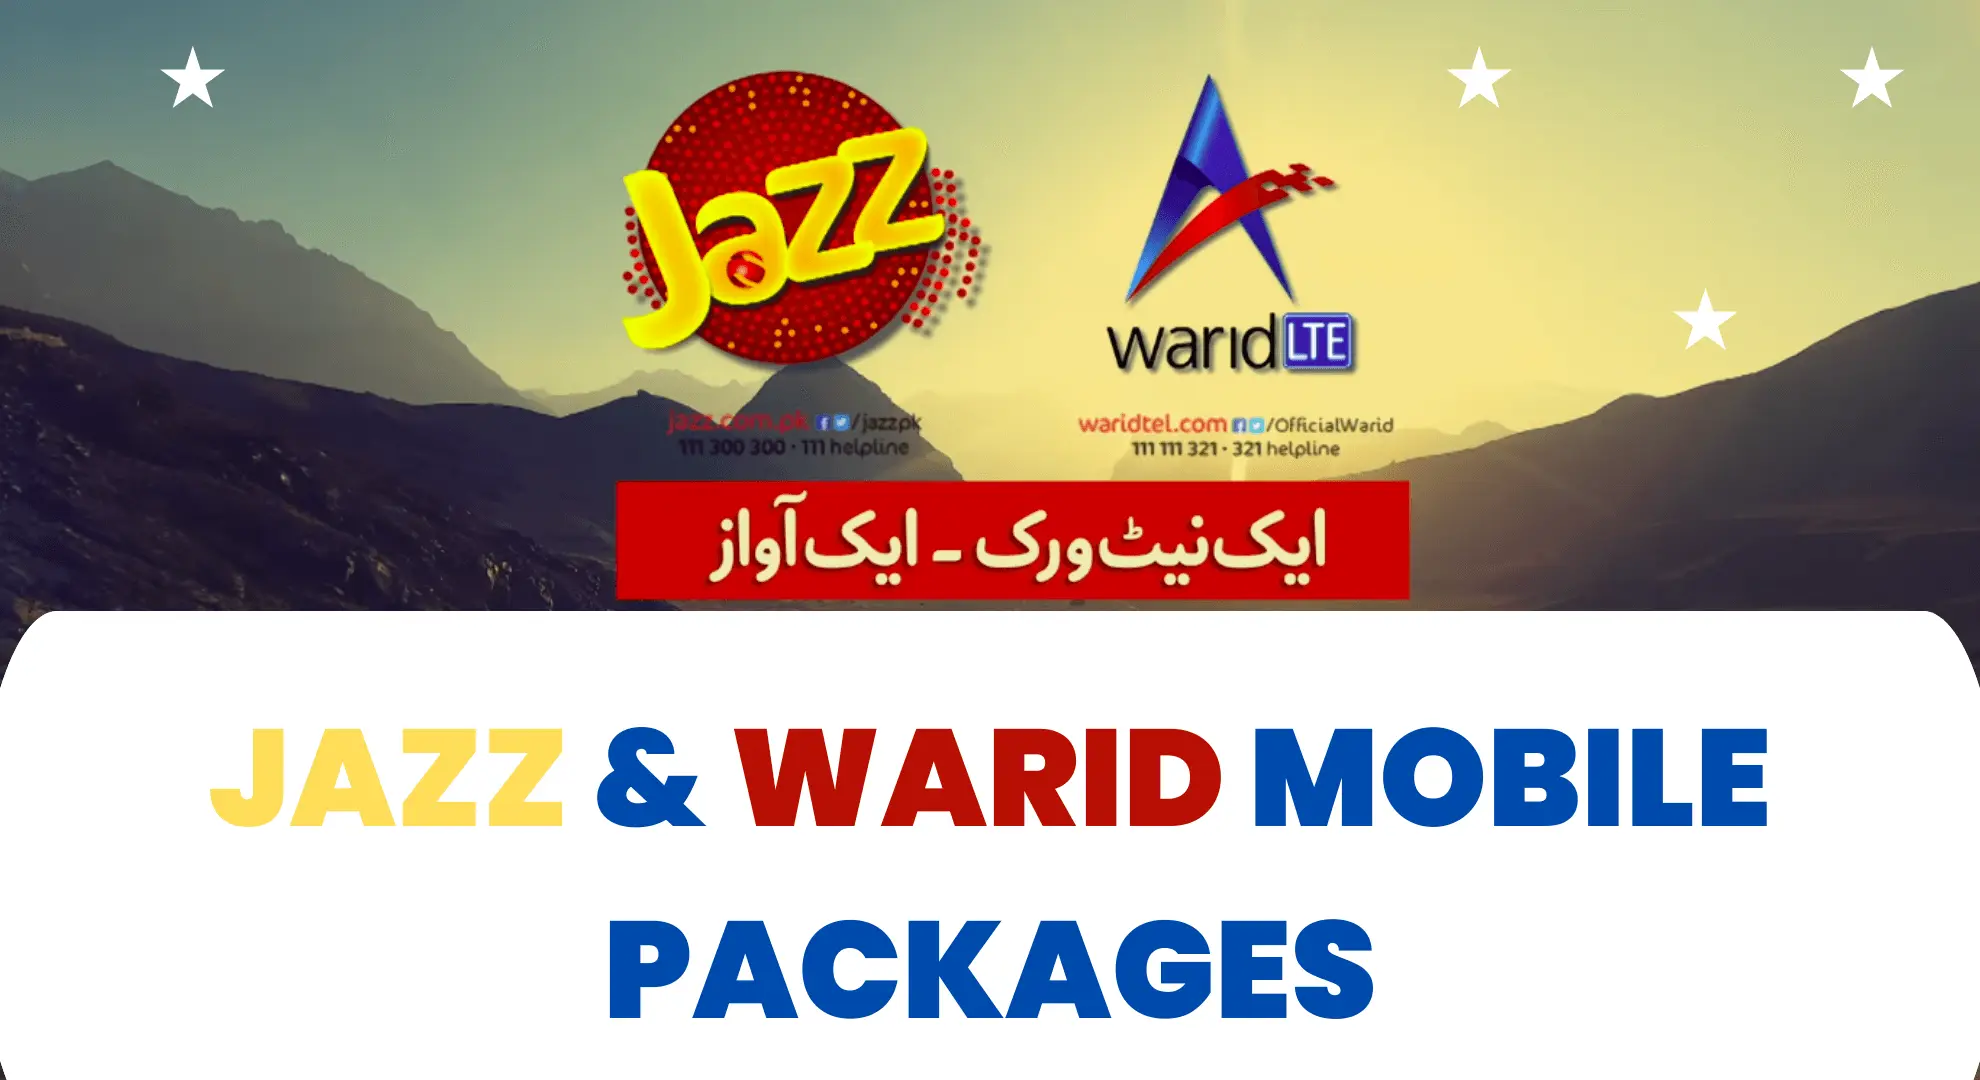 Jazz & Warid Packages